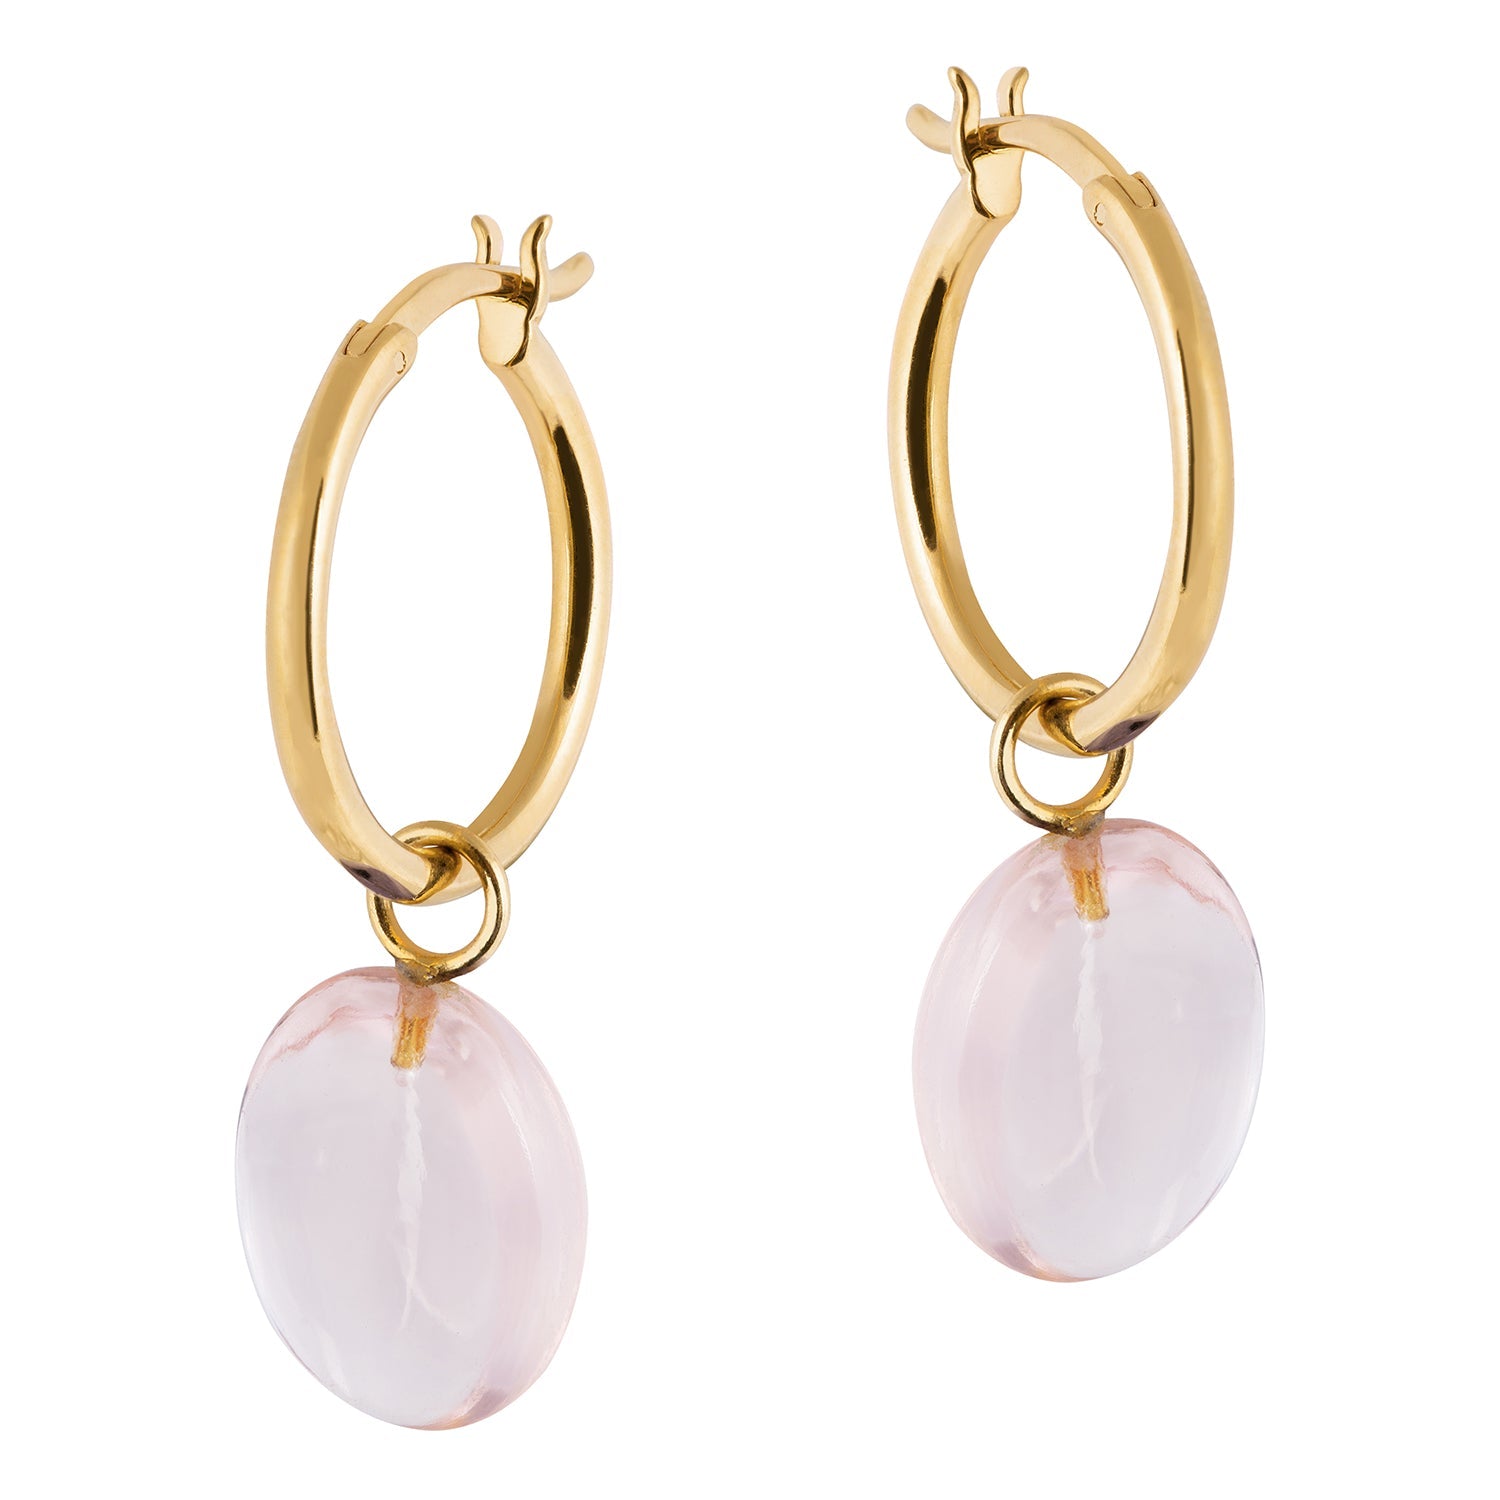 Eden Gold Hoop Earrings with Pink Quartz Charm